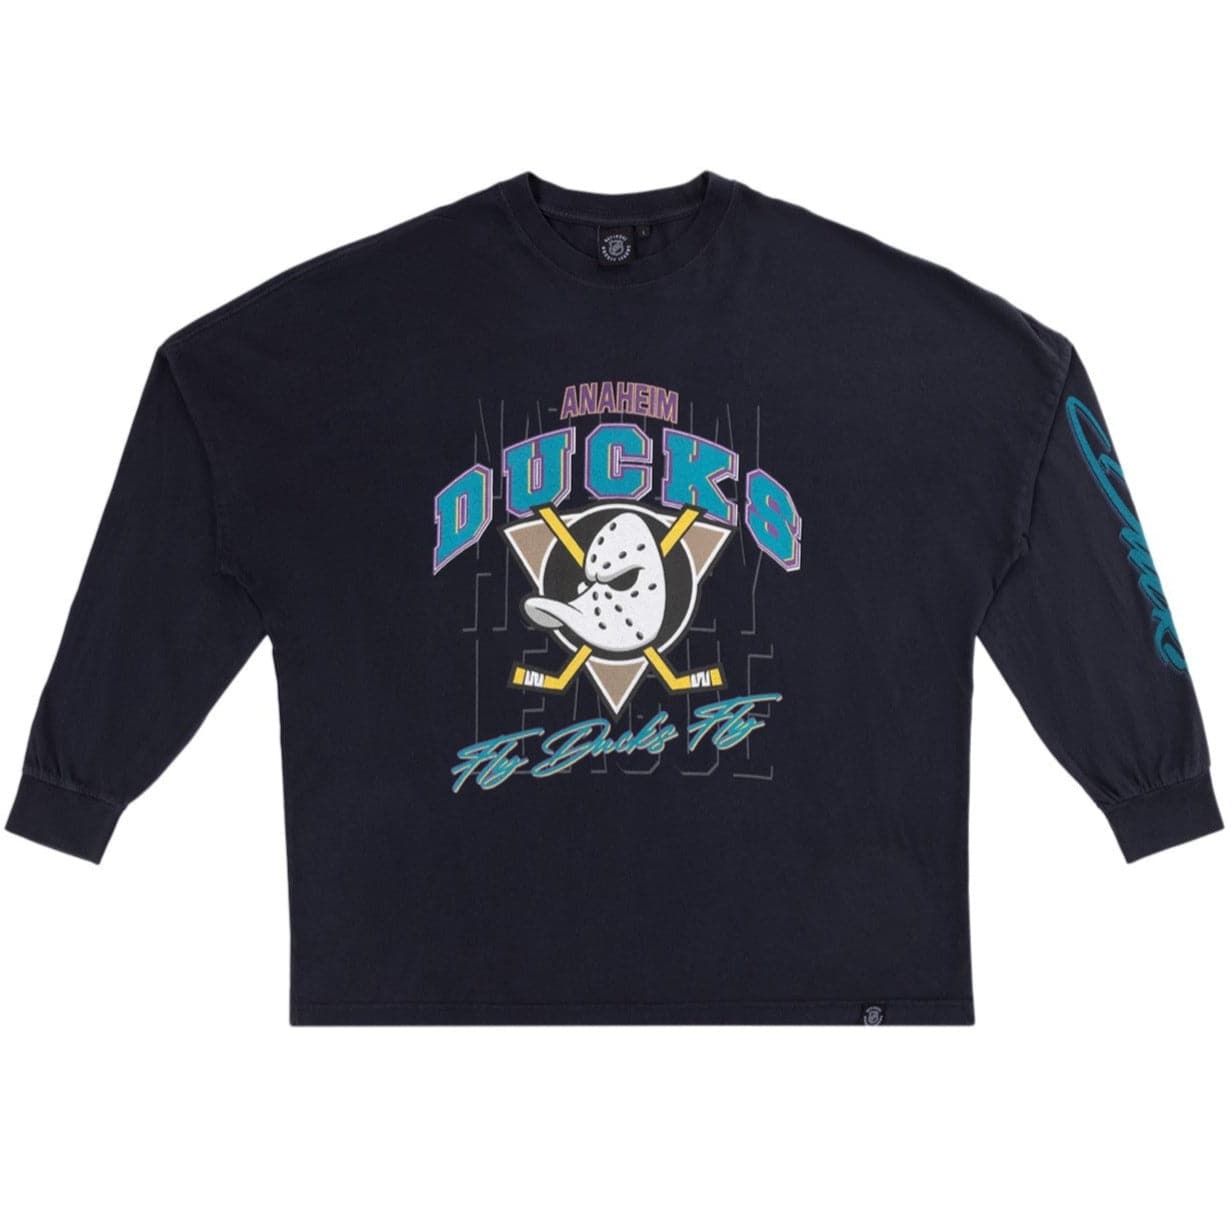 Mitchell & Ness Men's Anaheim Ducks Inaugural Season T-Shirt in Black - Size Medium